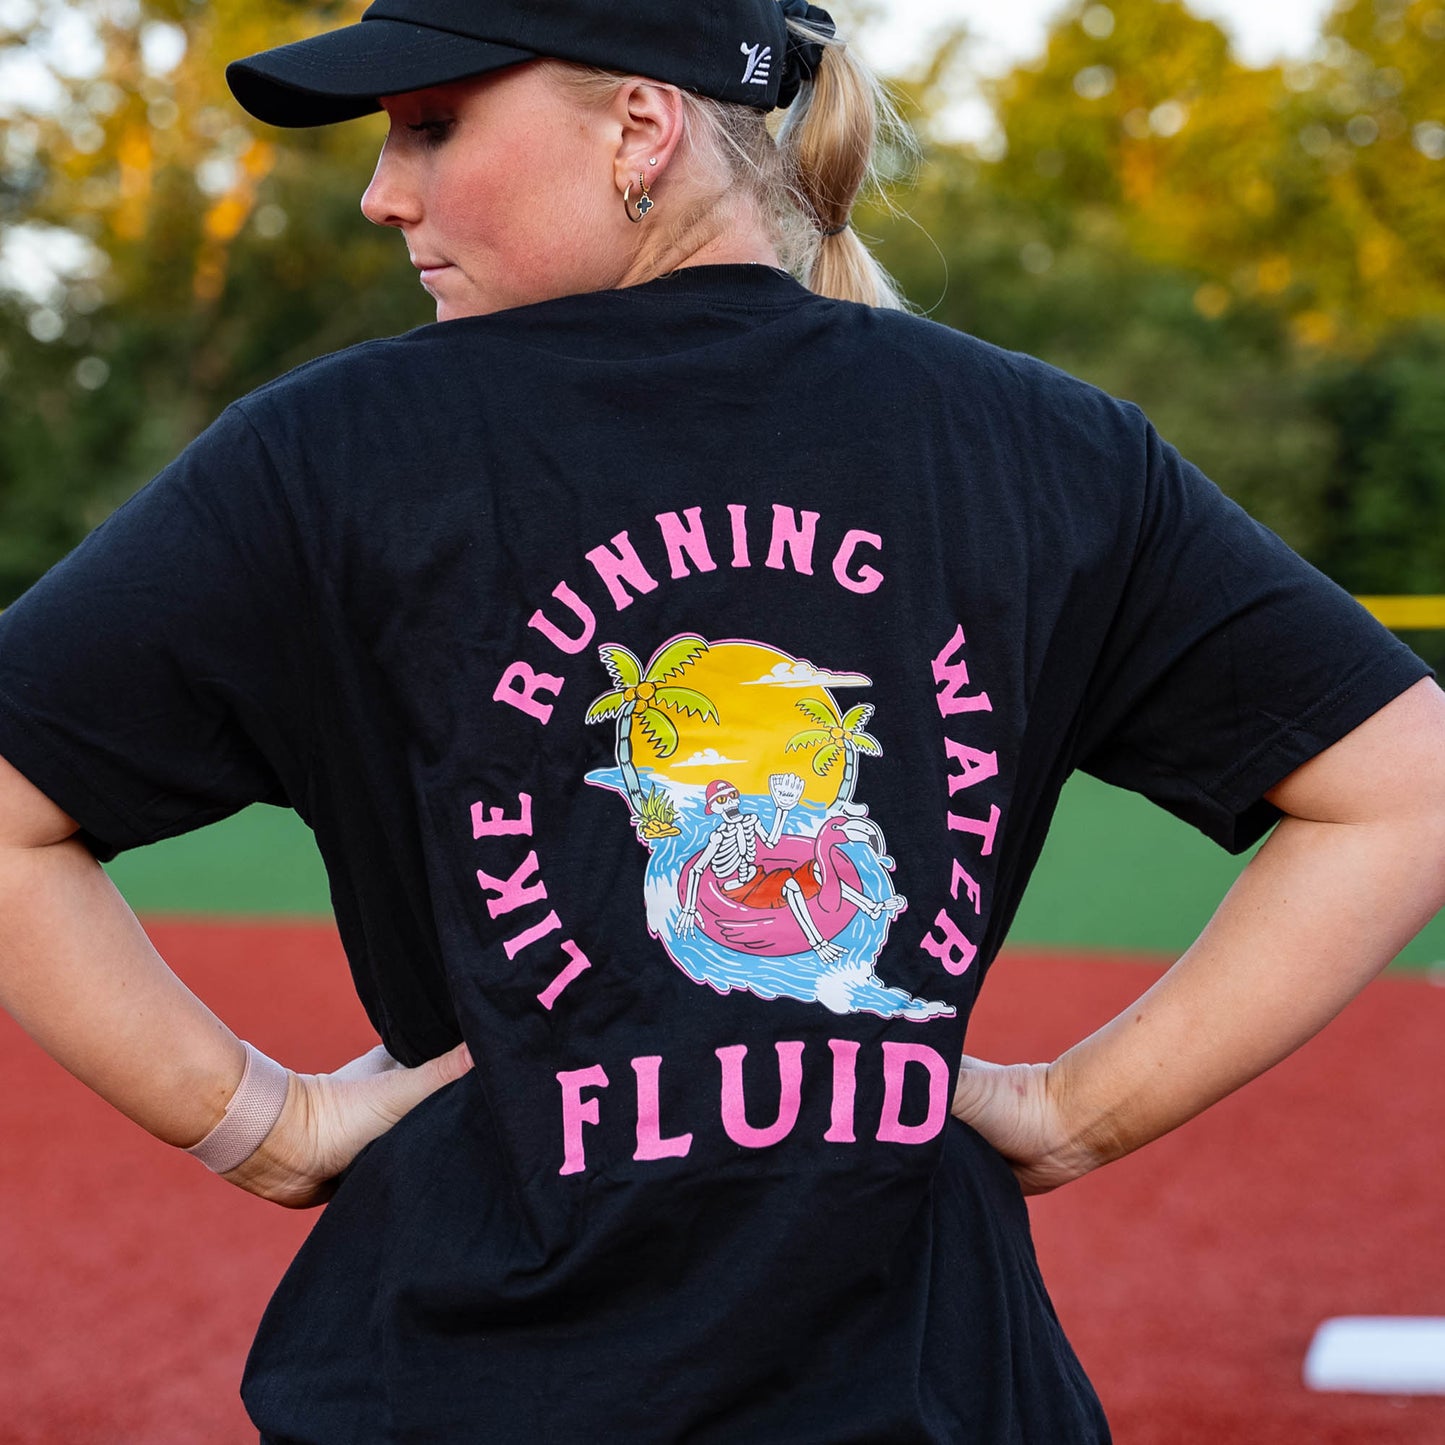 Fluid "Like Running Water" Tee Shirt